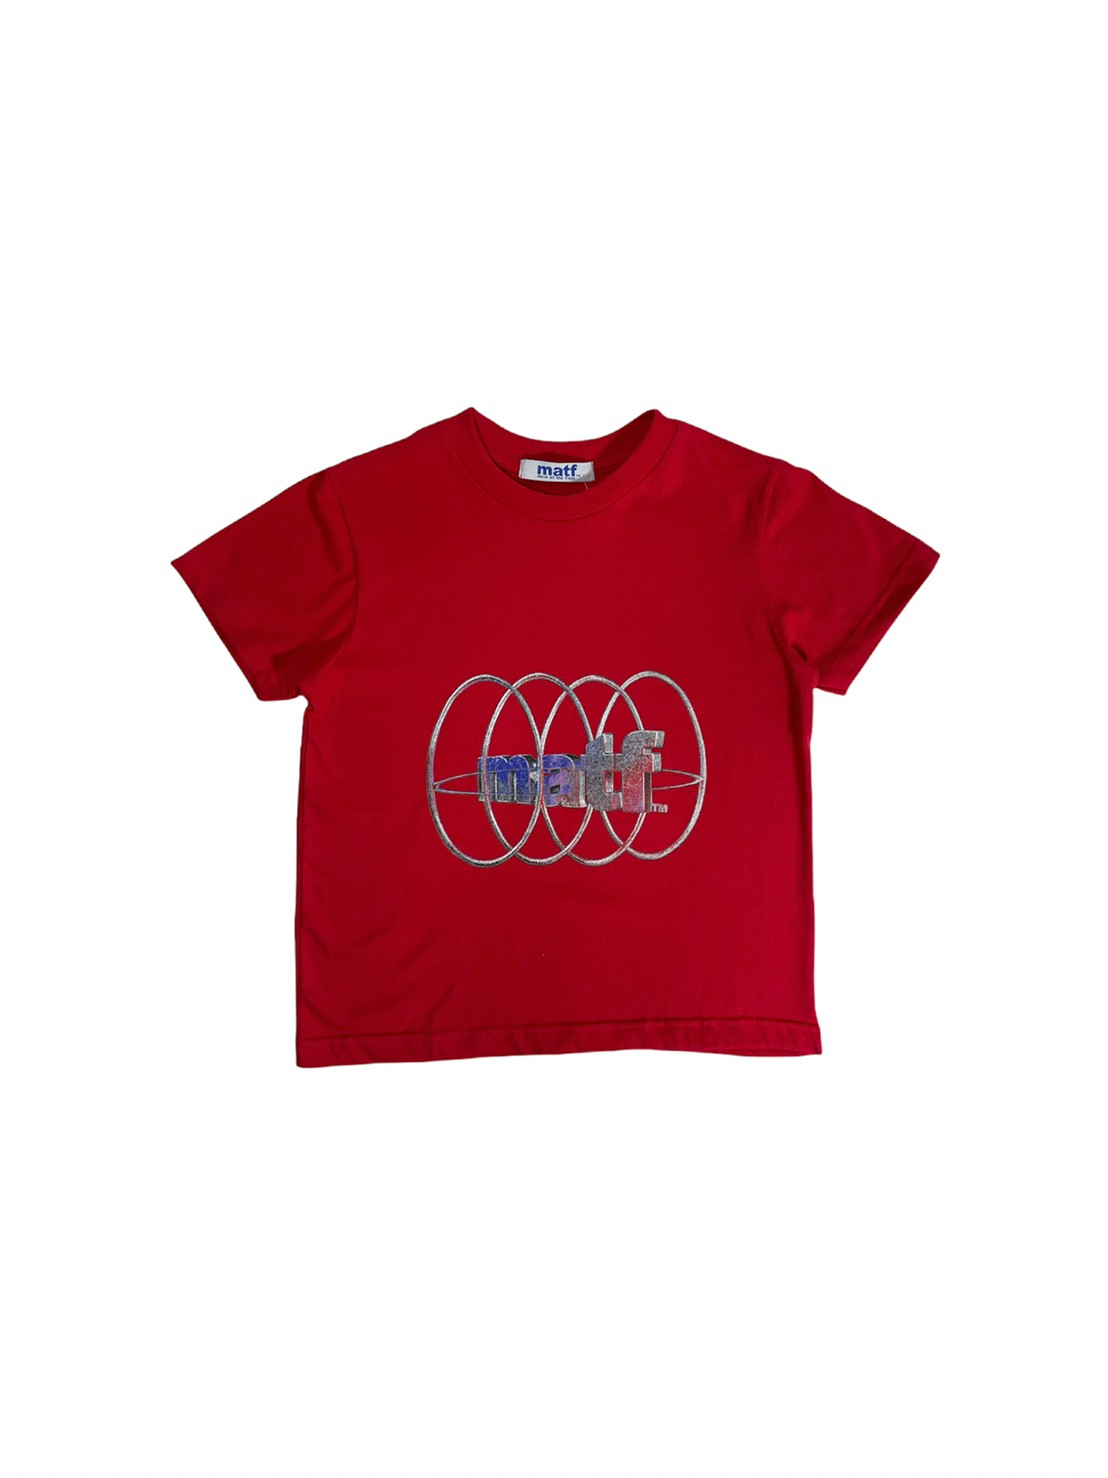 Matf trademark *spin rose* baby t-shirt